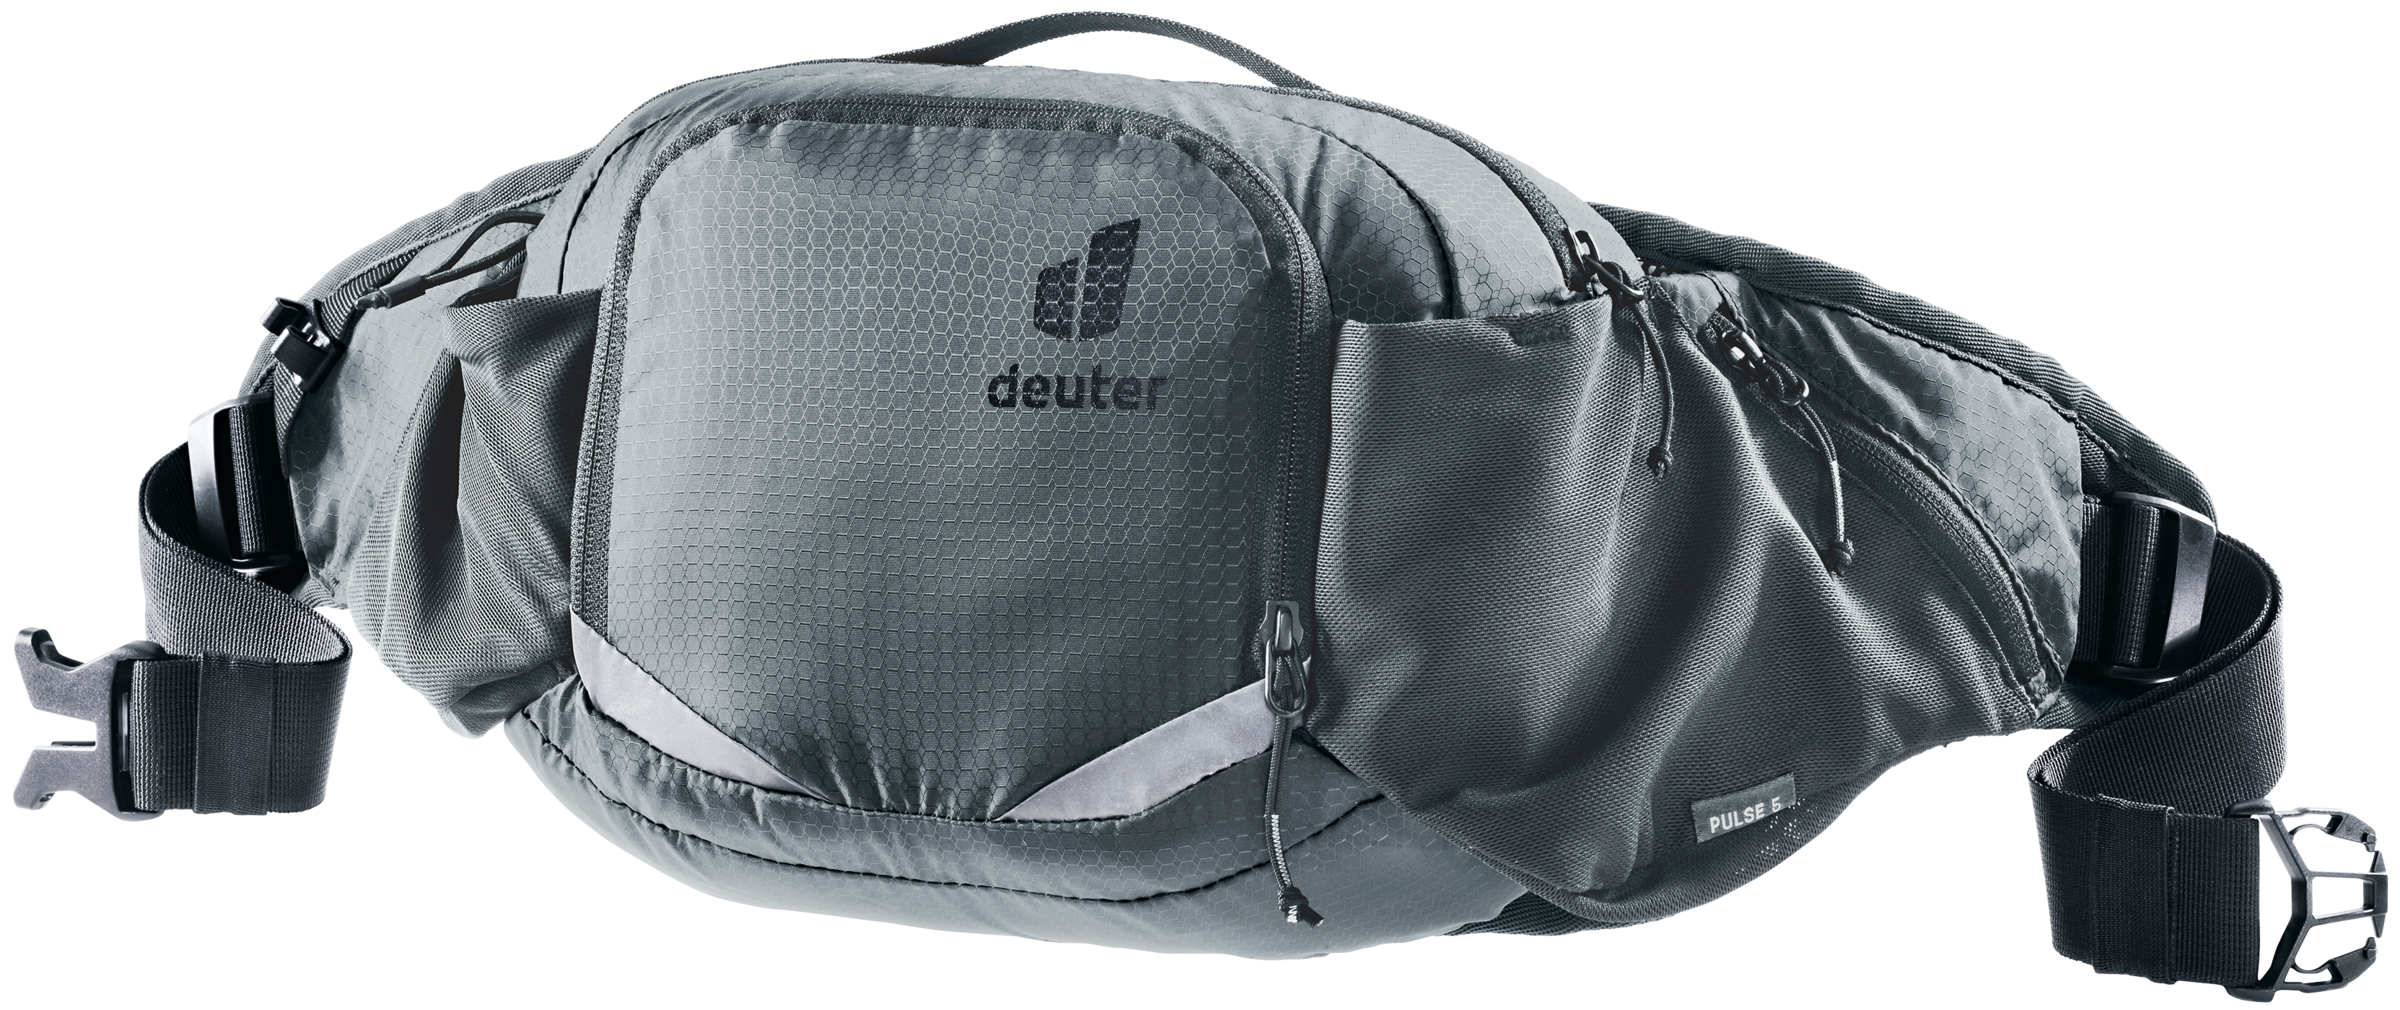 deuter Pulse | Hip bag